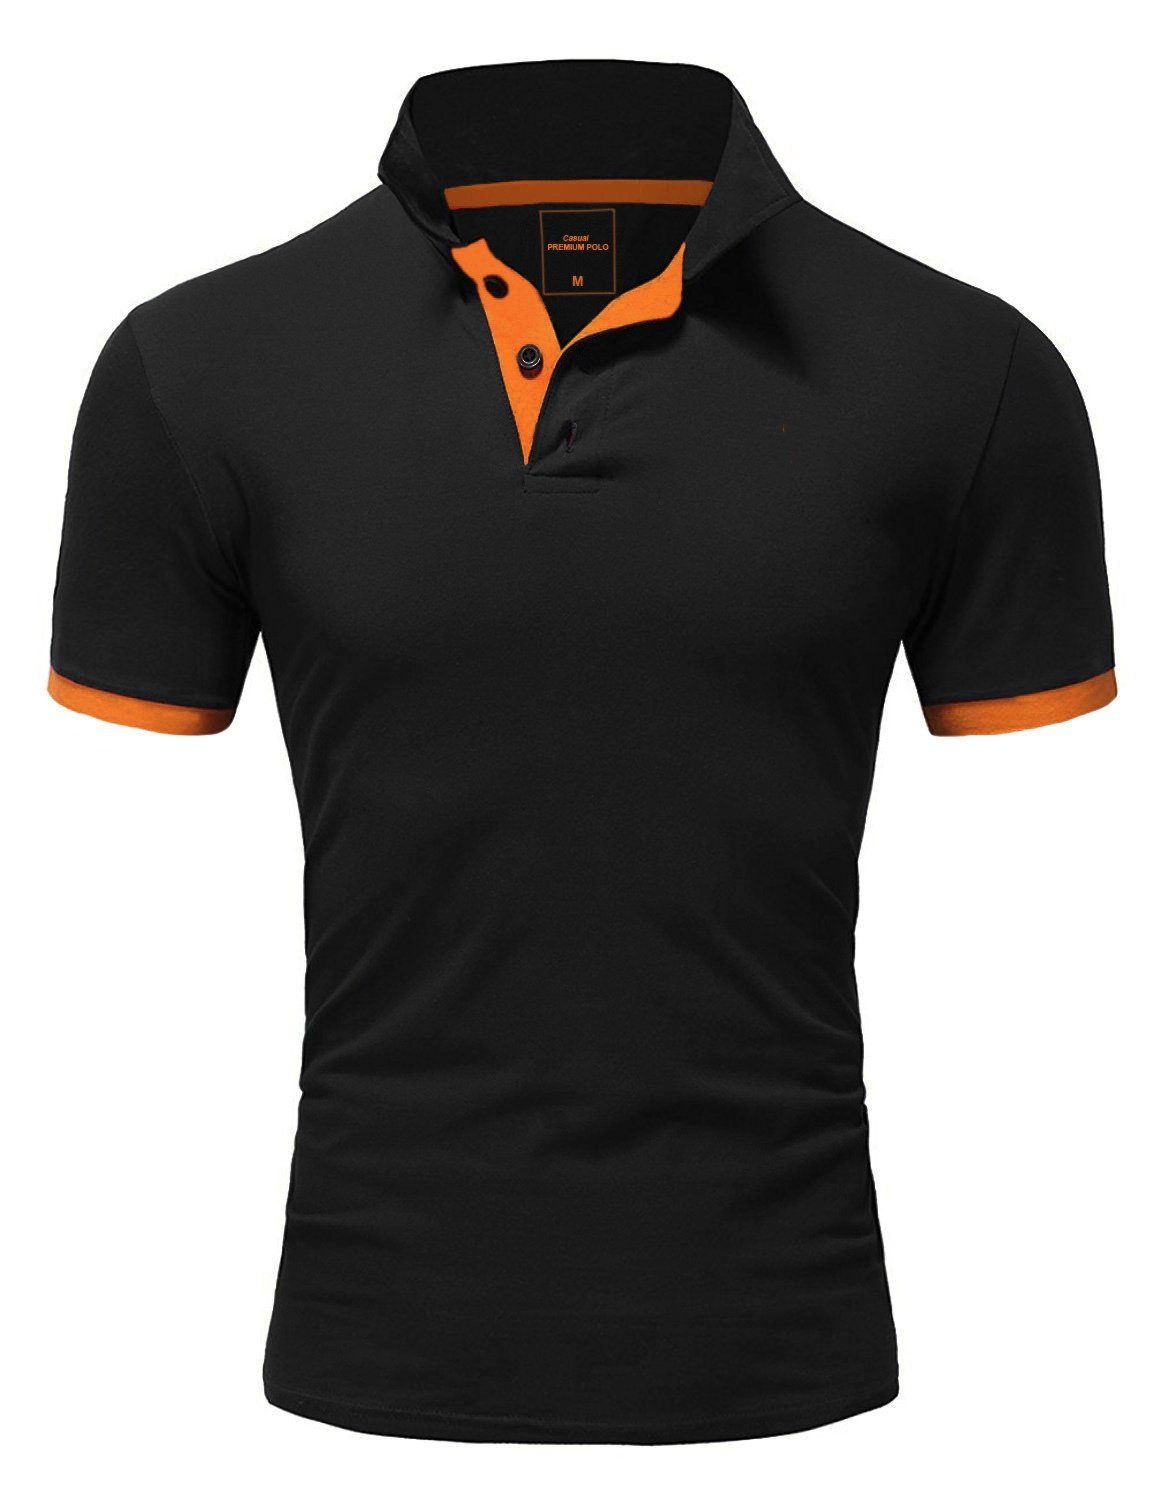 Angebotsrabatt Amaci&Sons Poloshirt DETROIT Basic Kontrast Poloshirt Schwarz/Orange